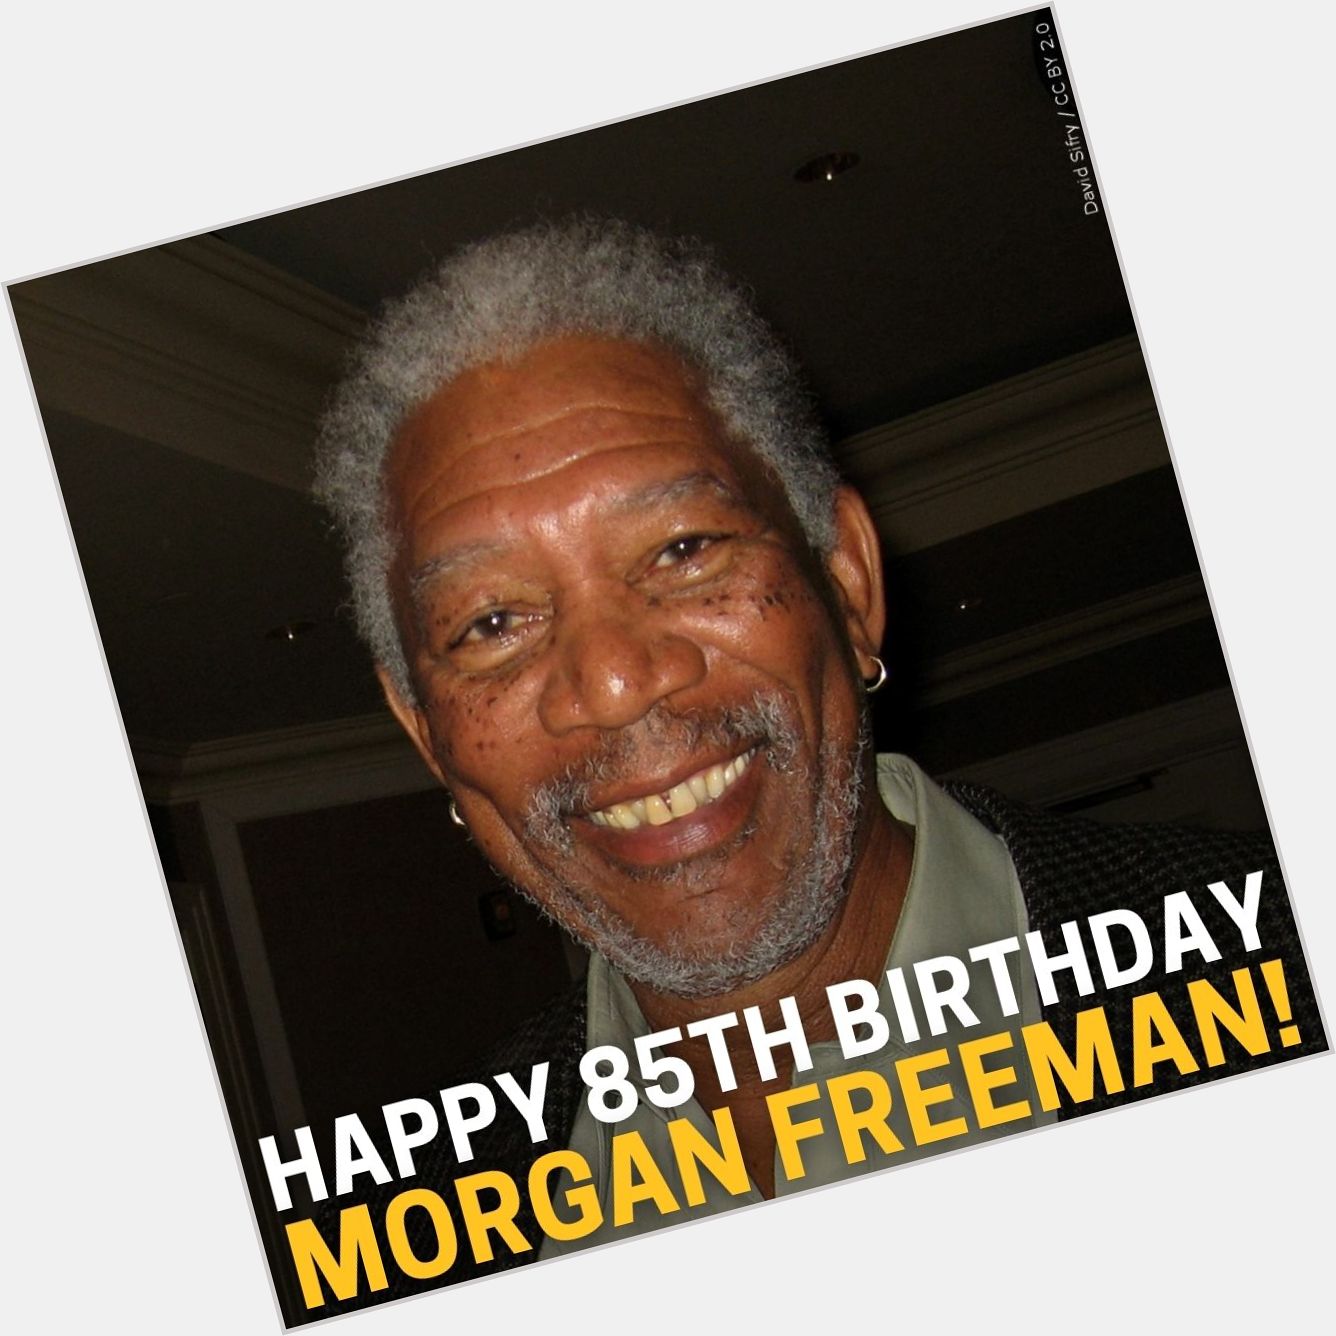 Happy birthday, Morgan Freeman! 